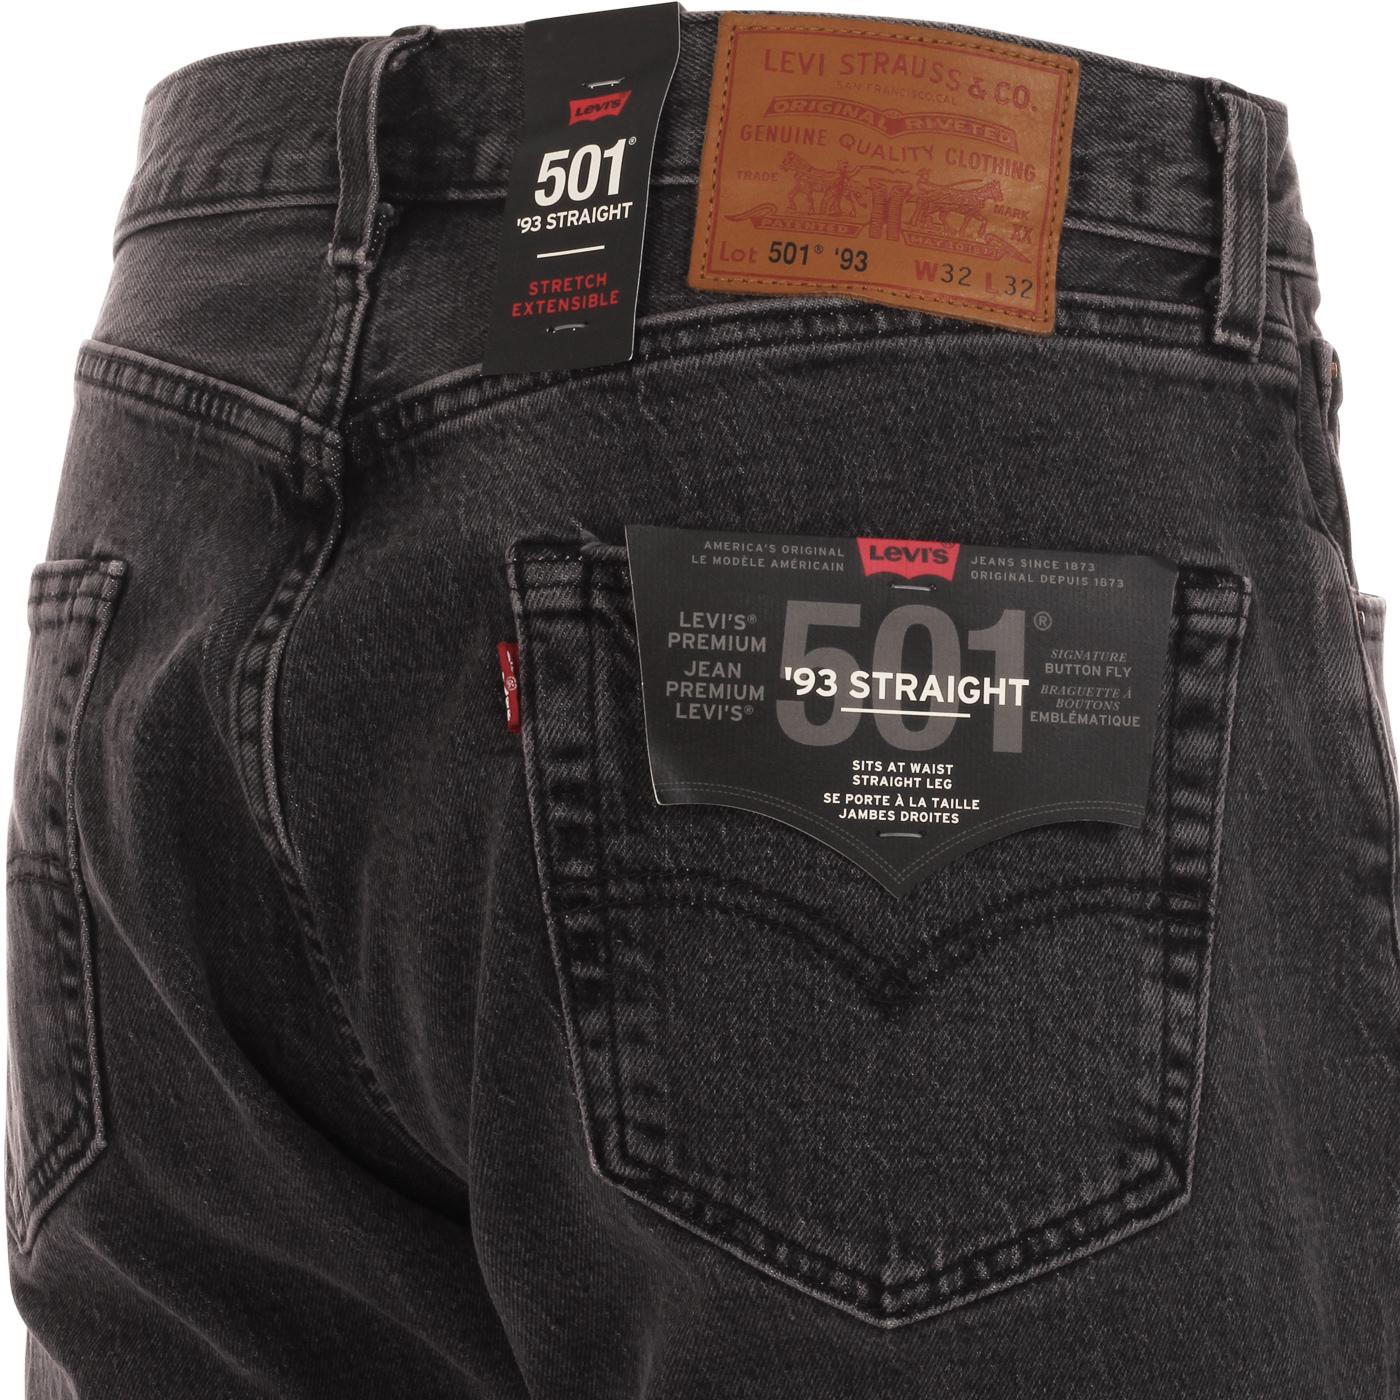 LEVI'S 501 '93 Straight Retro Denim Jeans in Raisin Stone